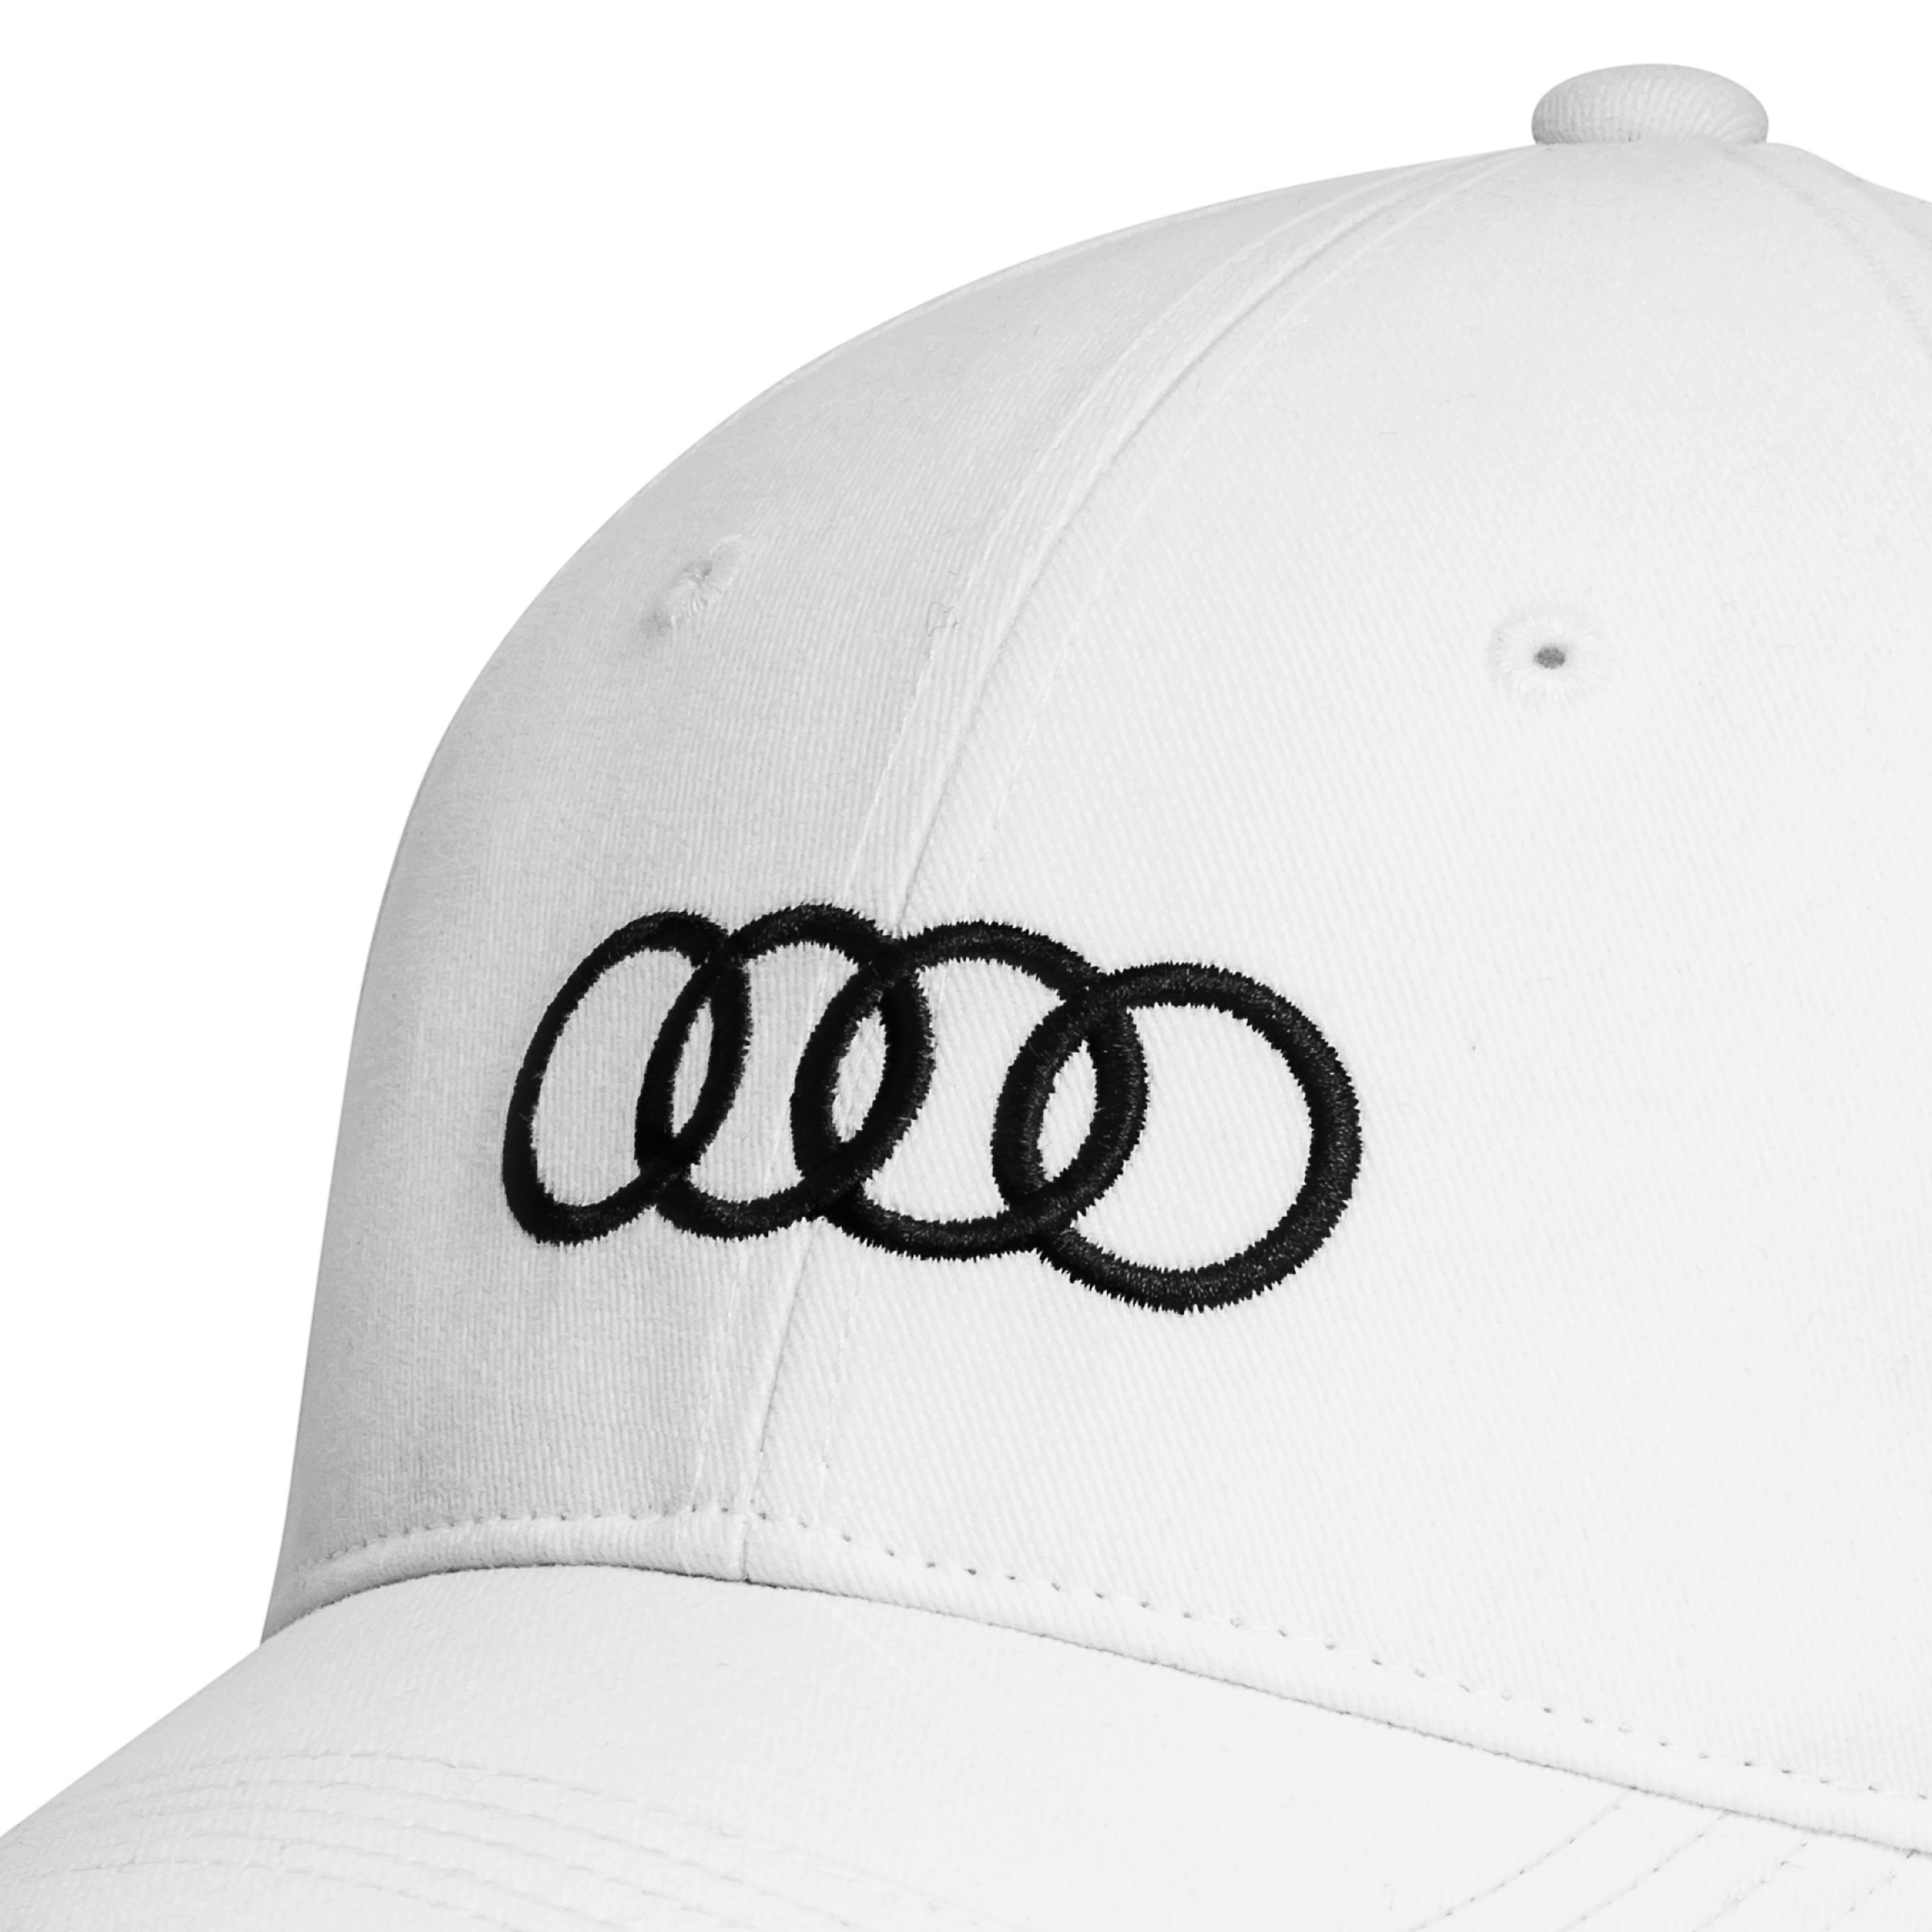 Audi Collection 3131701000 Rings Cap, Black